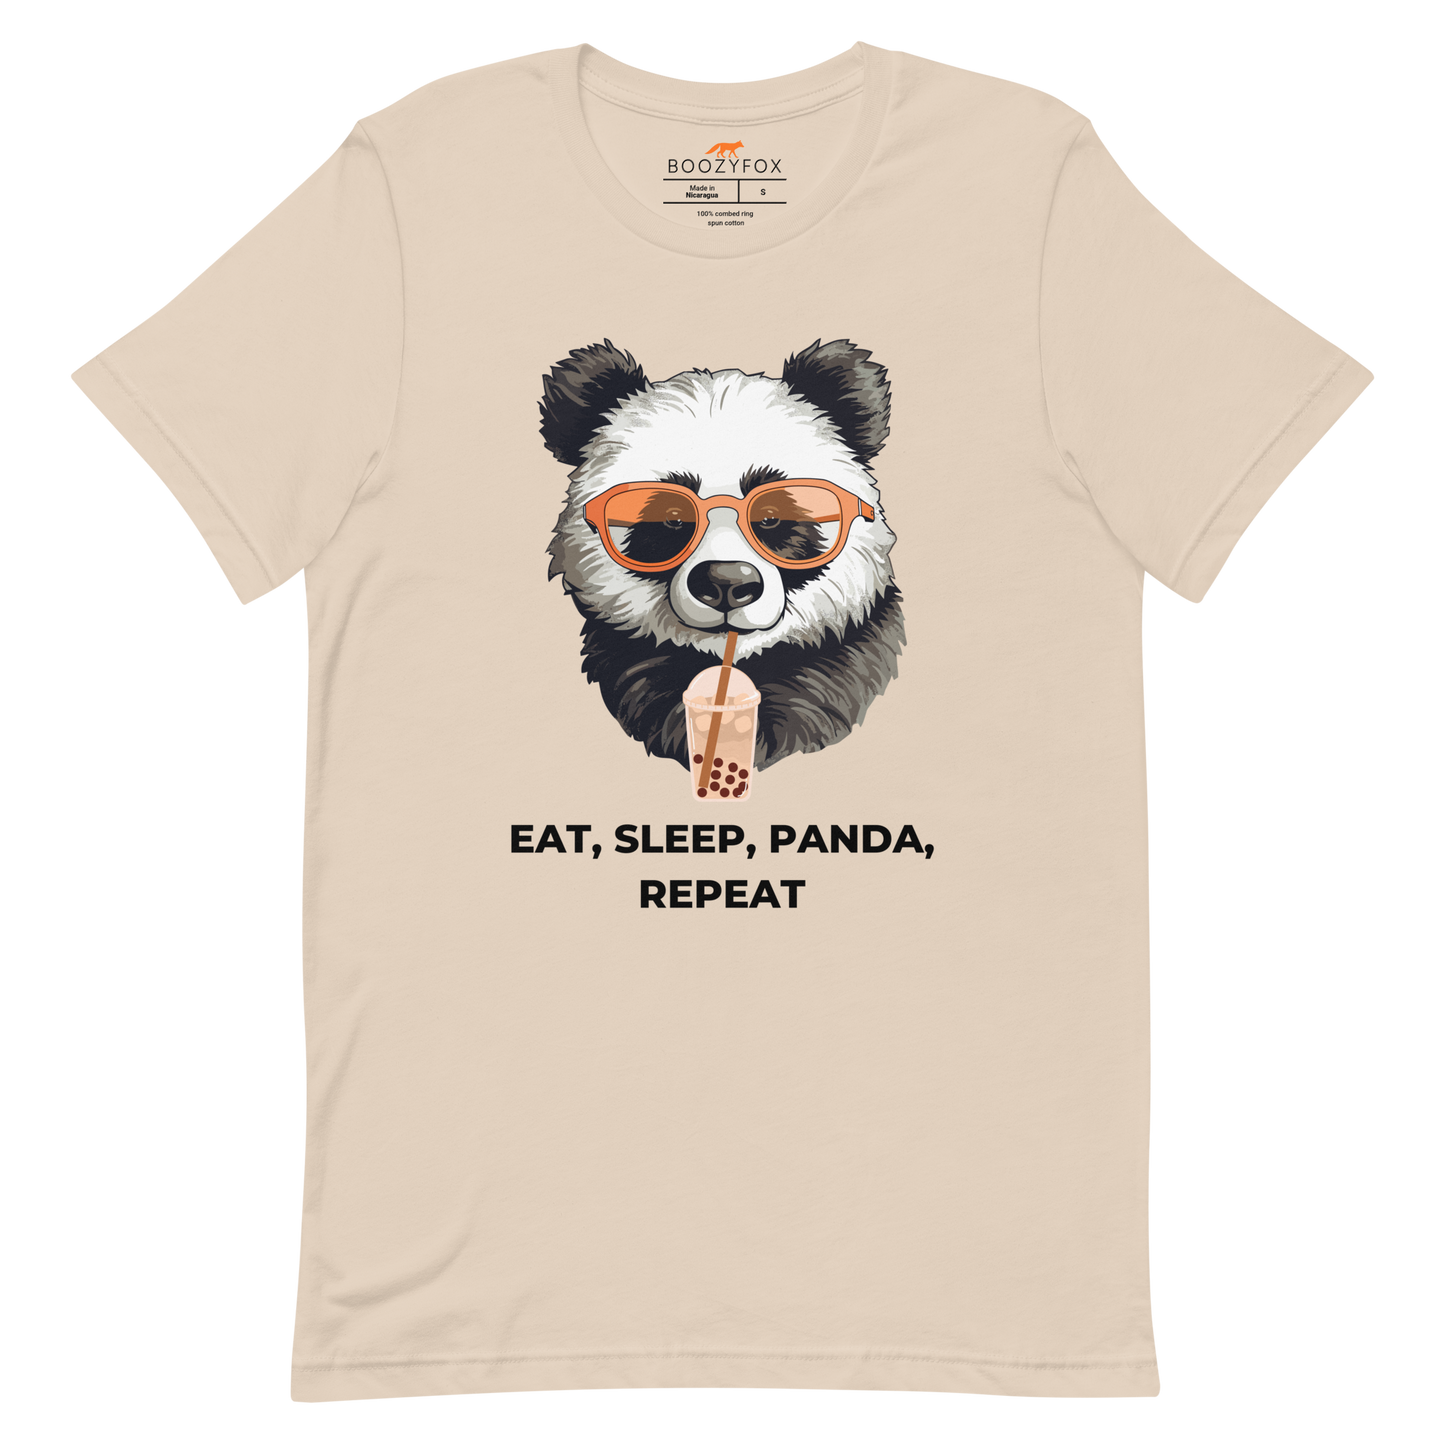 Soft Cream Premium Panda Tee featuring an adorable Eat, Sleep, Panda, Repeat graphic on the chest - Funny Graphic Panda Tees - Boozy Fox